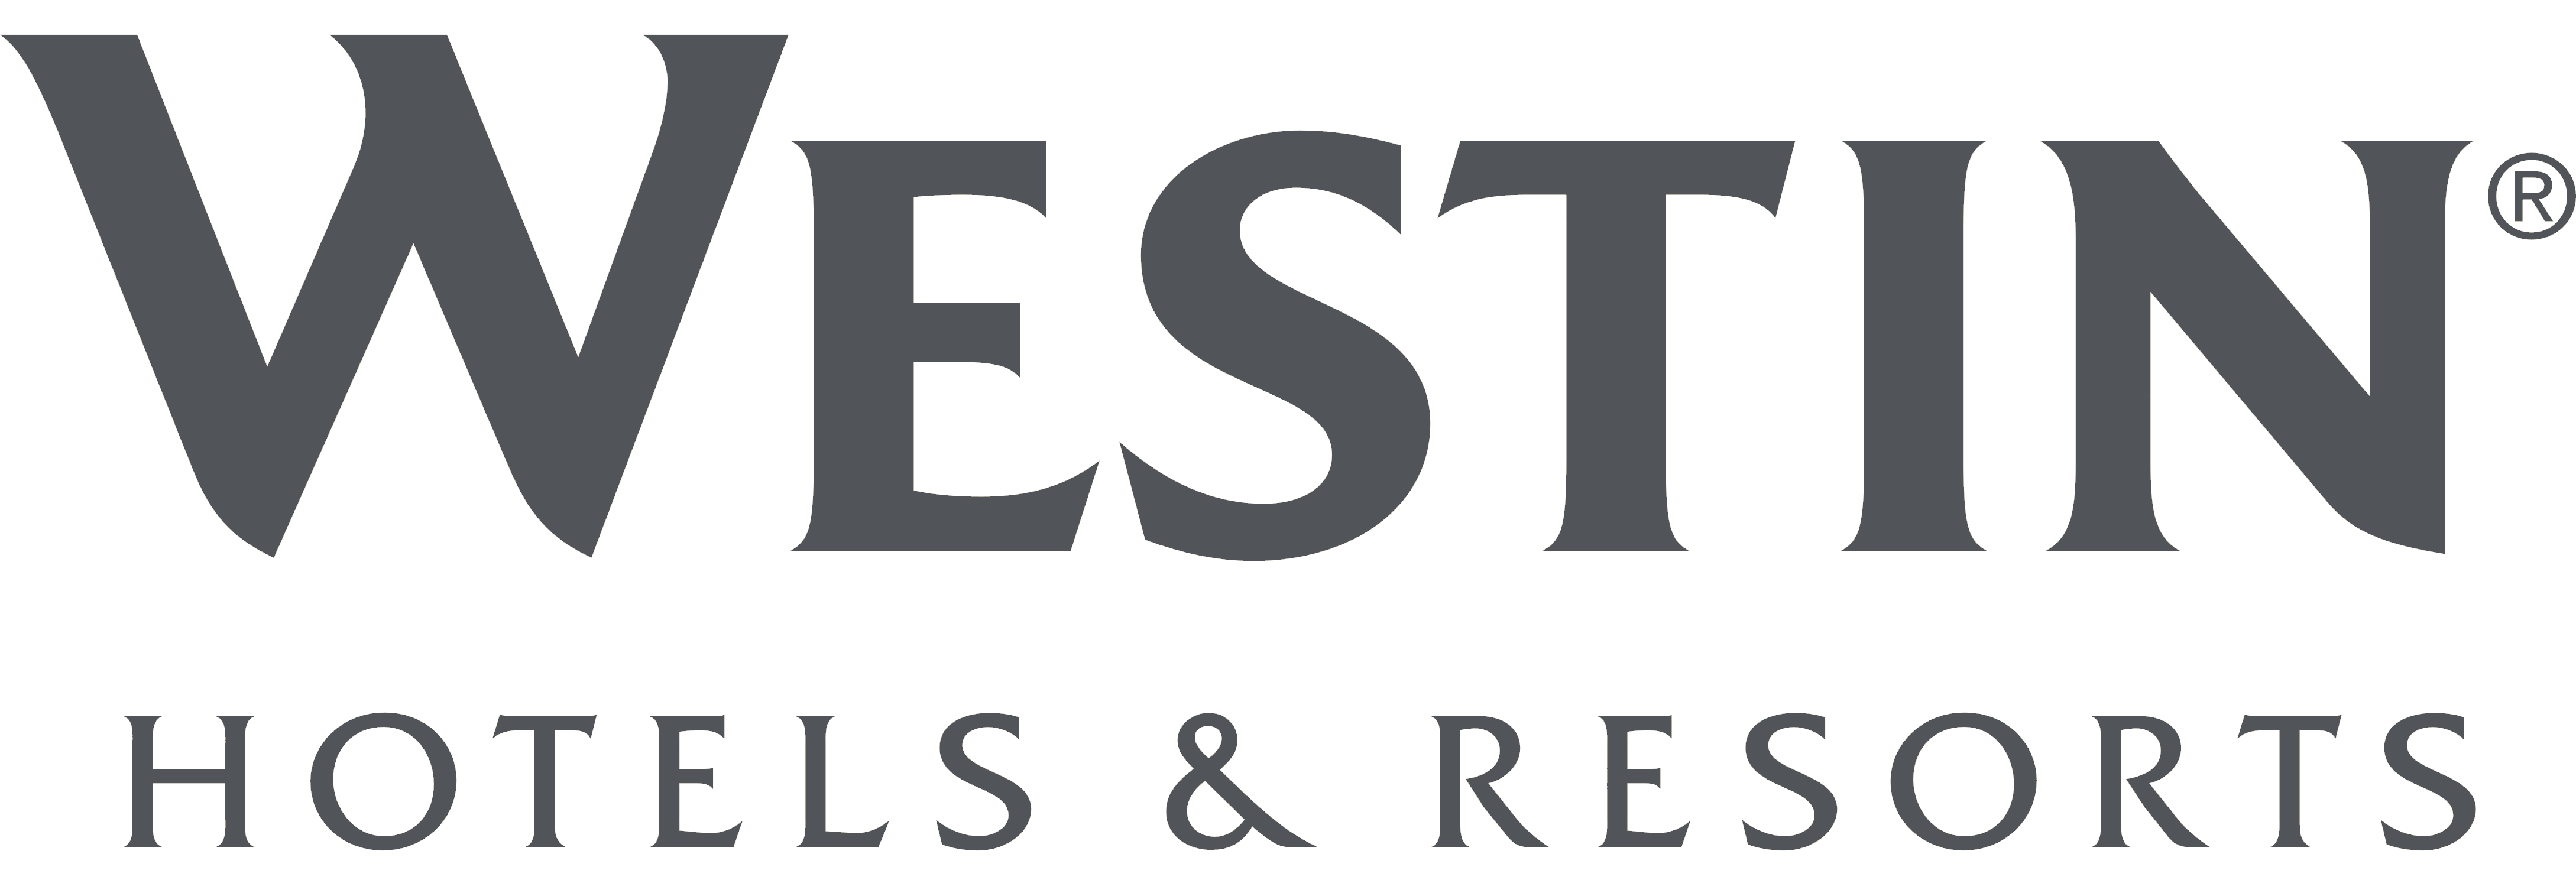 Westin Hotels & Resorts logo, logotype